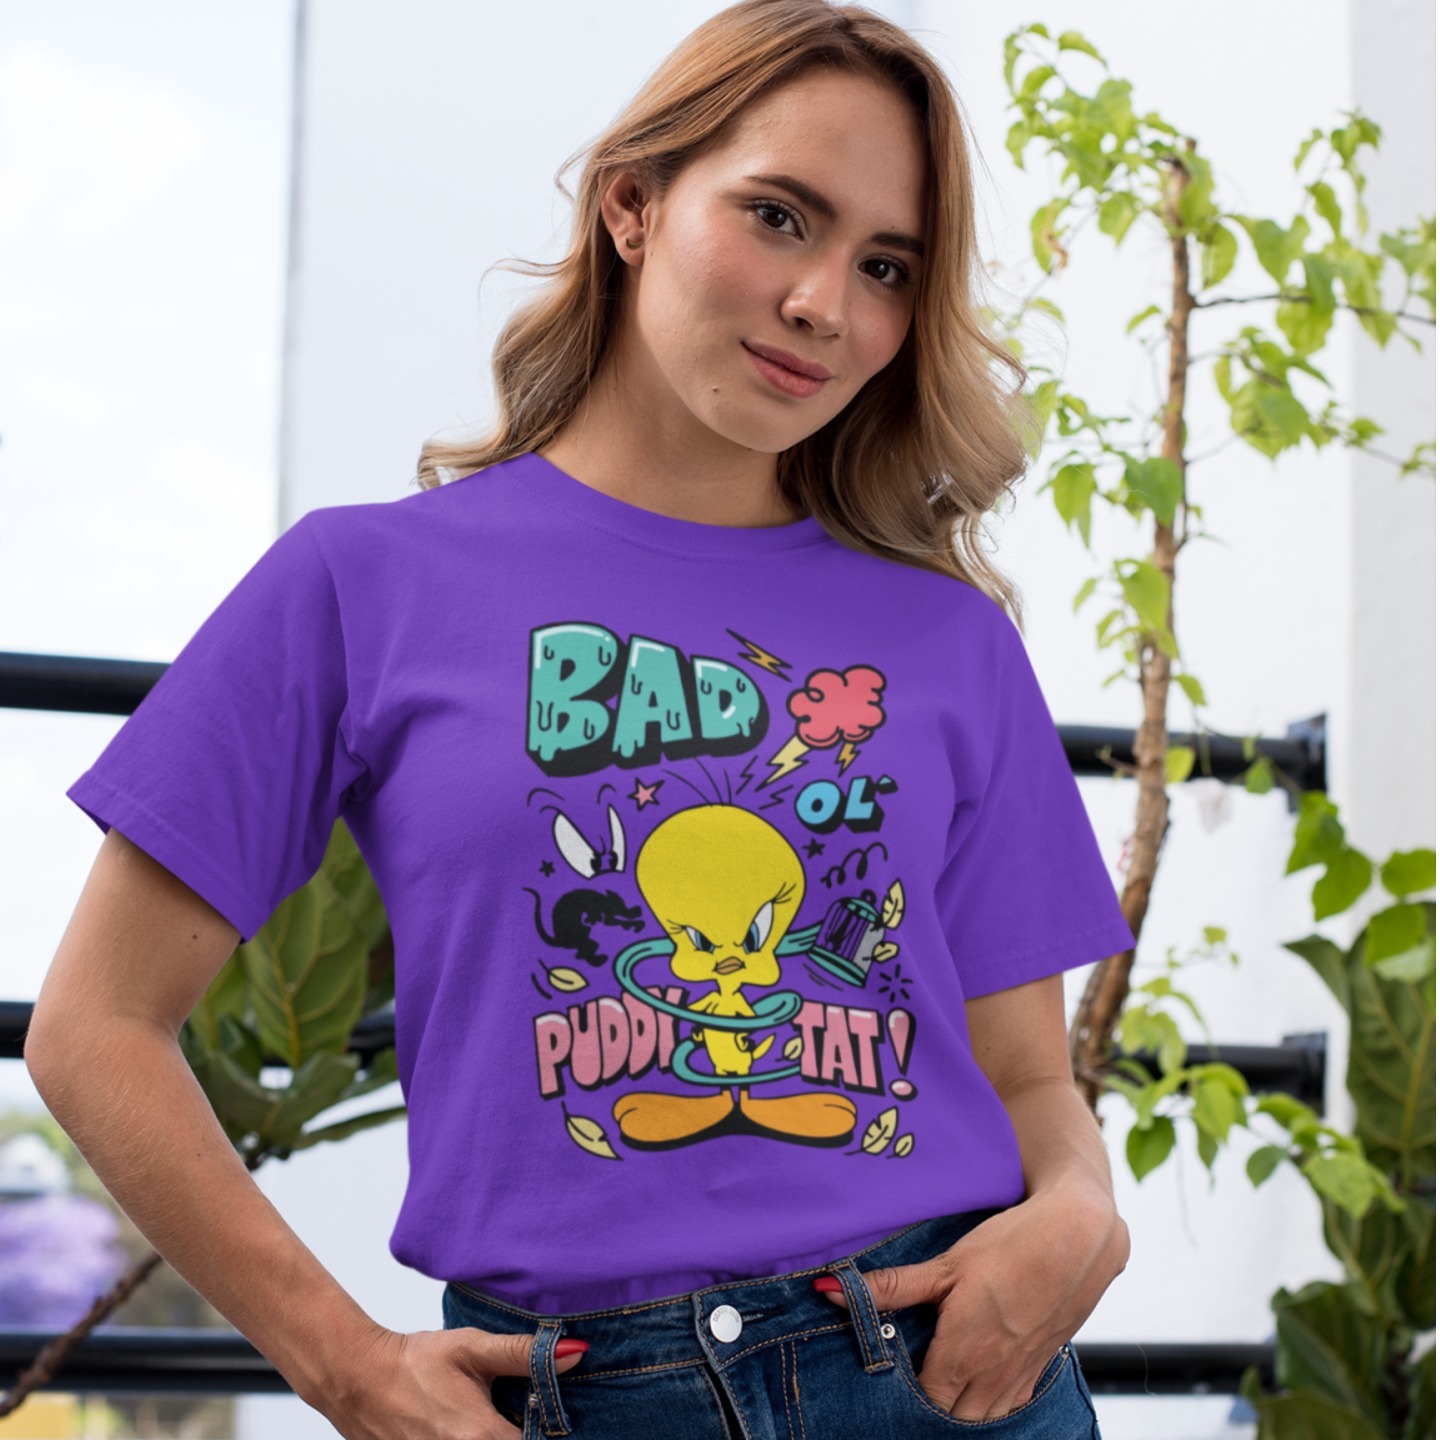 Bad Puddy Cat Tshirt for Girls